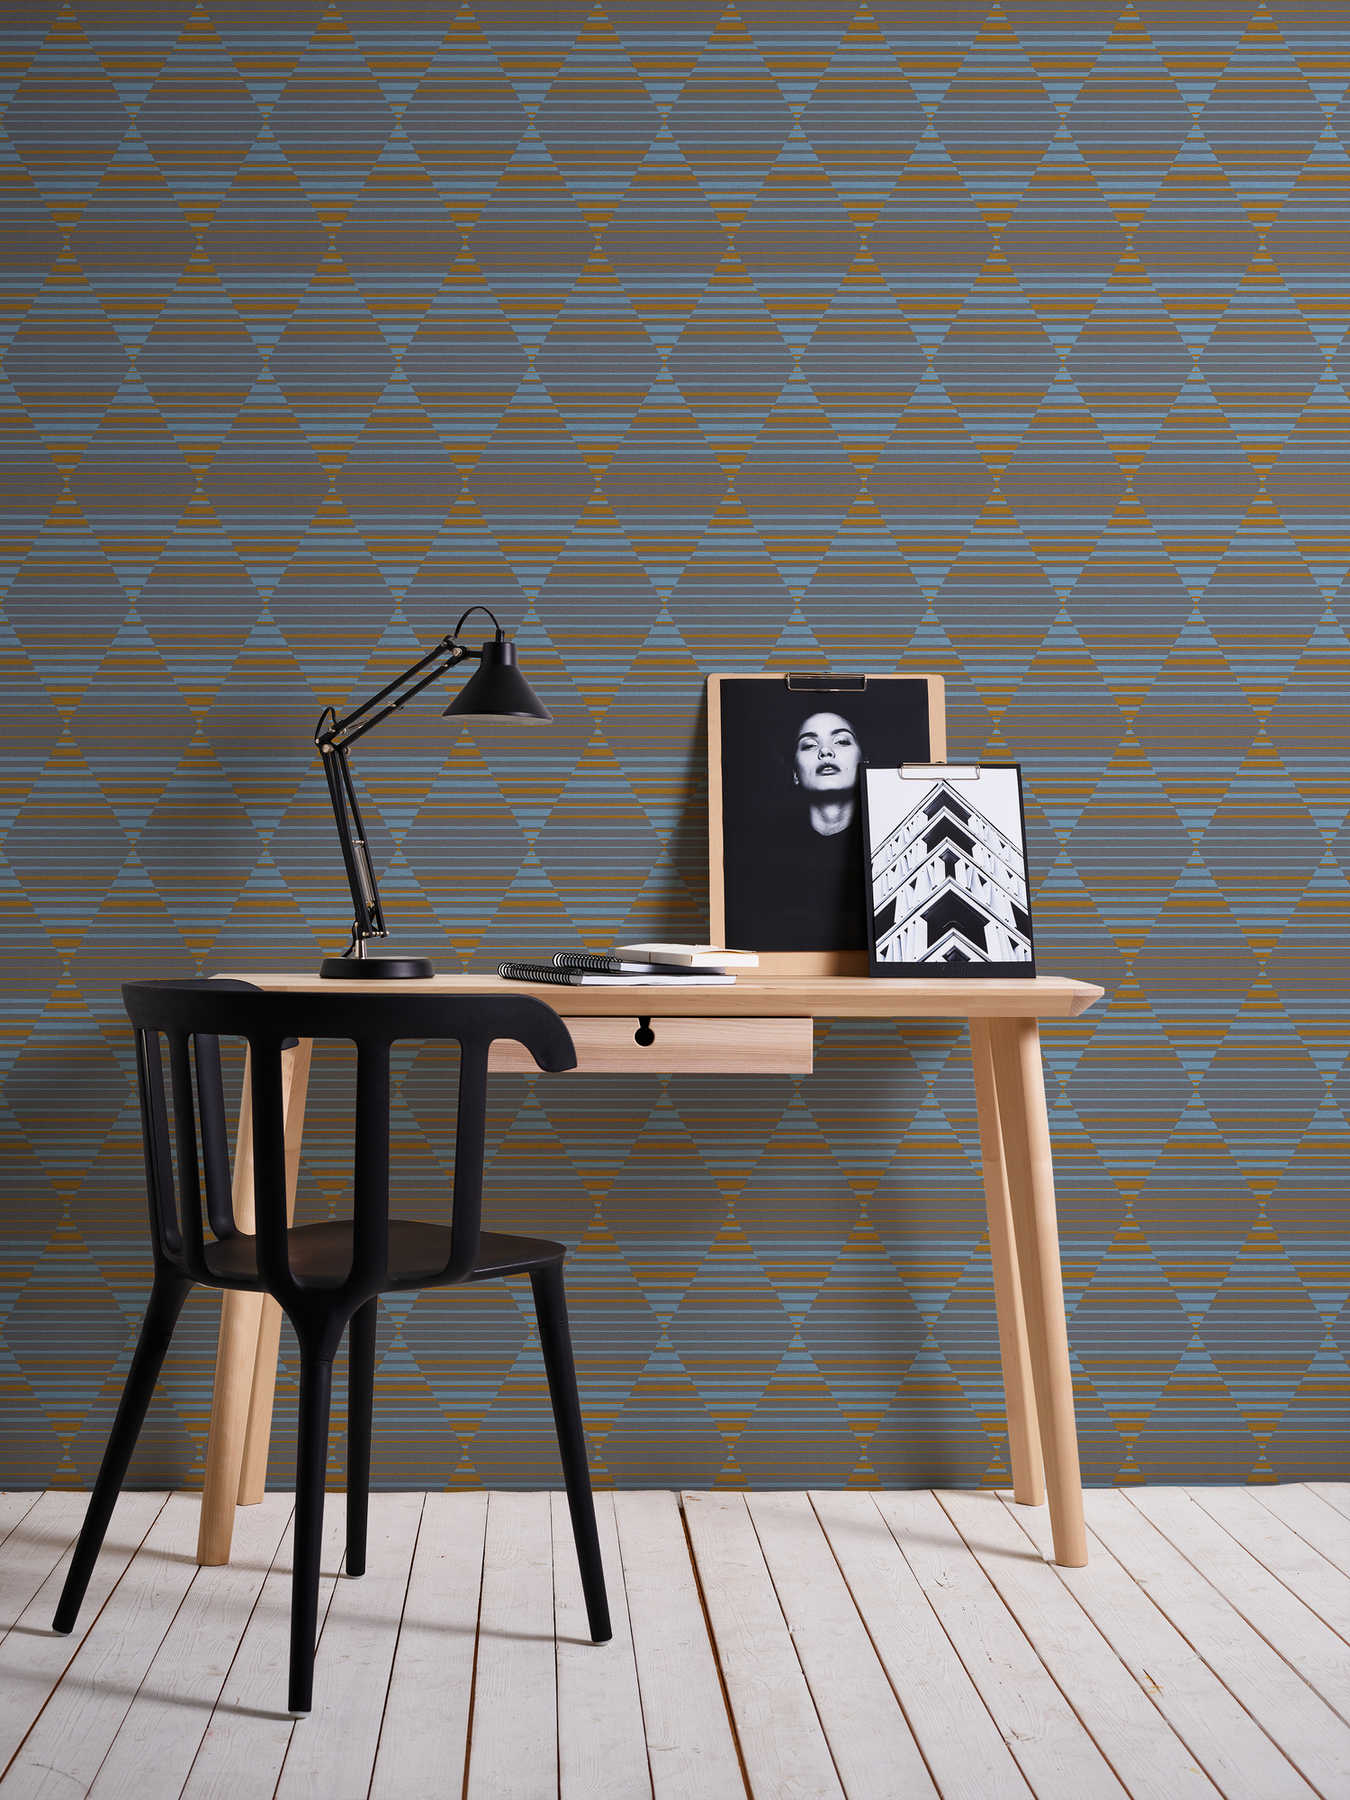             Retro wallpaper 70s pattern stripes & diamonds - grey, blue, orange
        